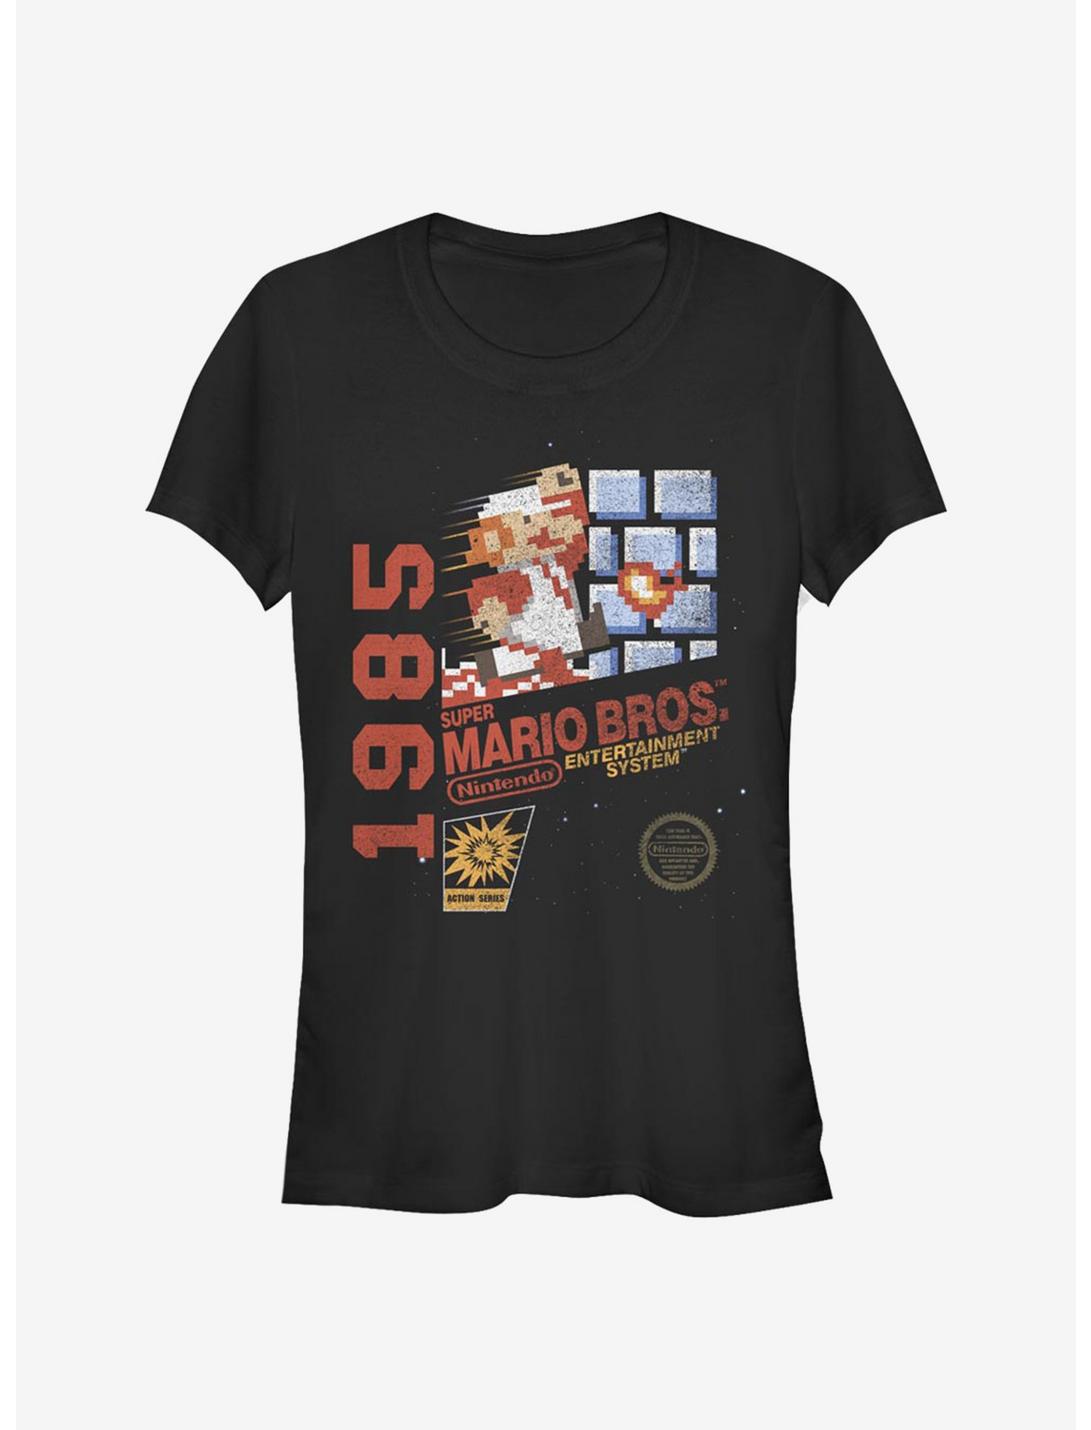 Super Mario Entertainment System 1985 Vintage Girls T-Shirt, BLACK, hi-res